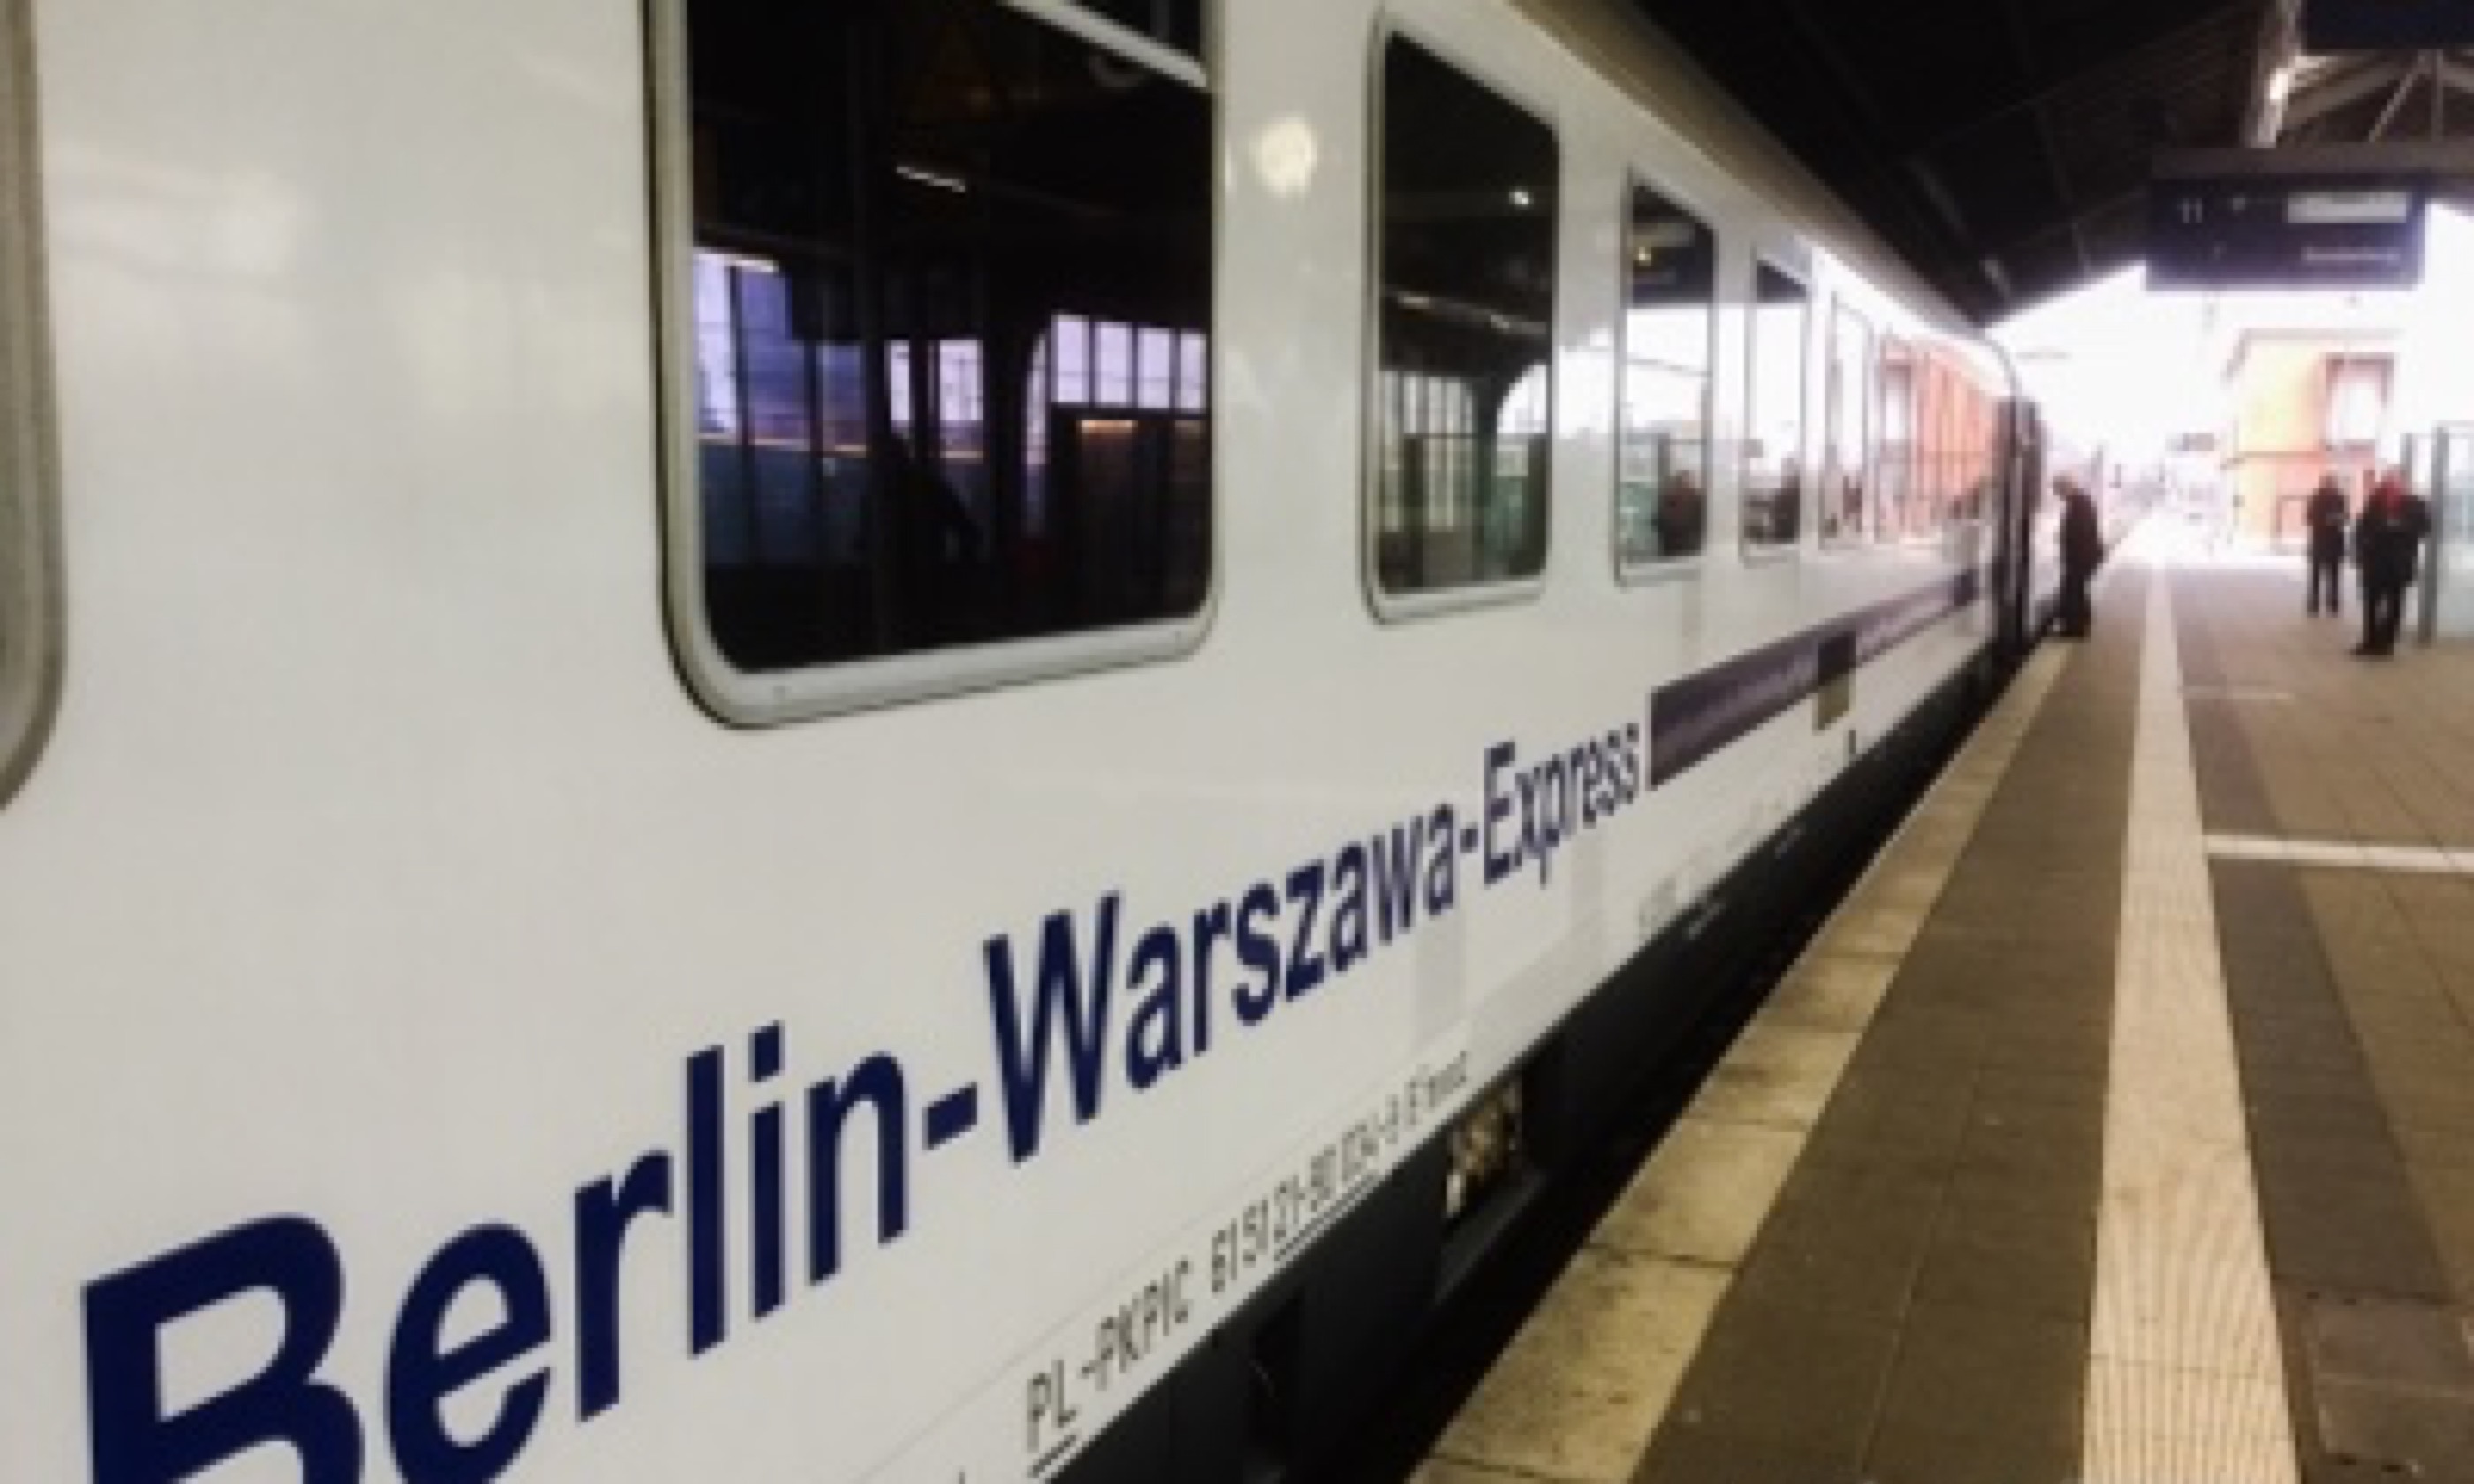 Berlin-Warsaw Express (Matthew Woodward)